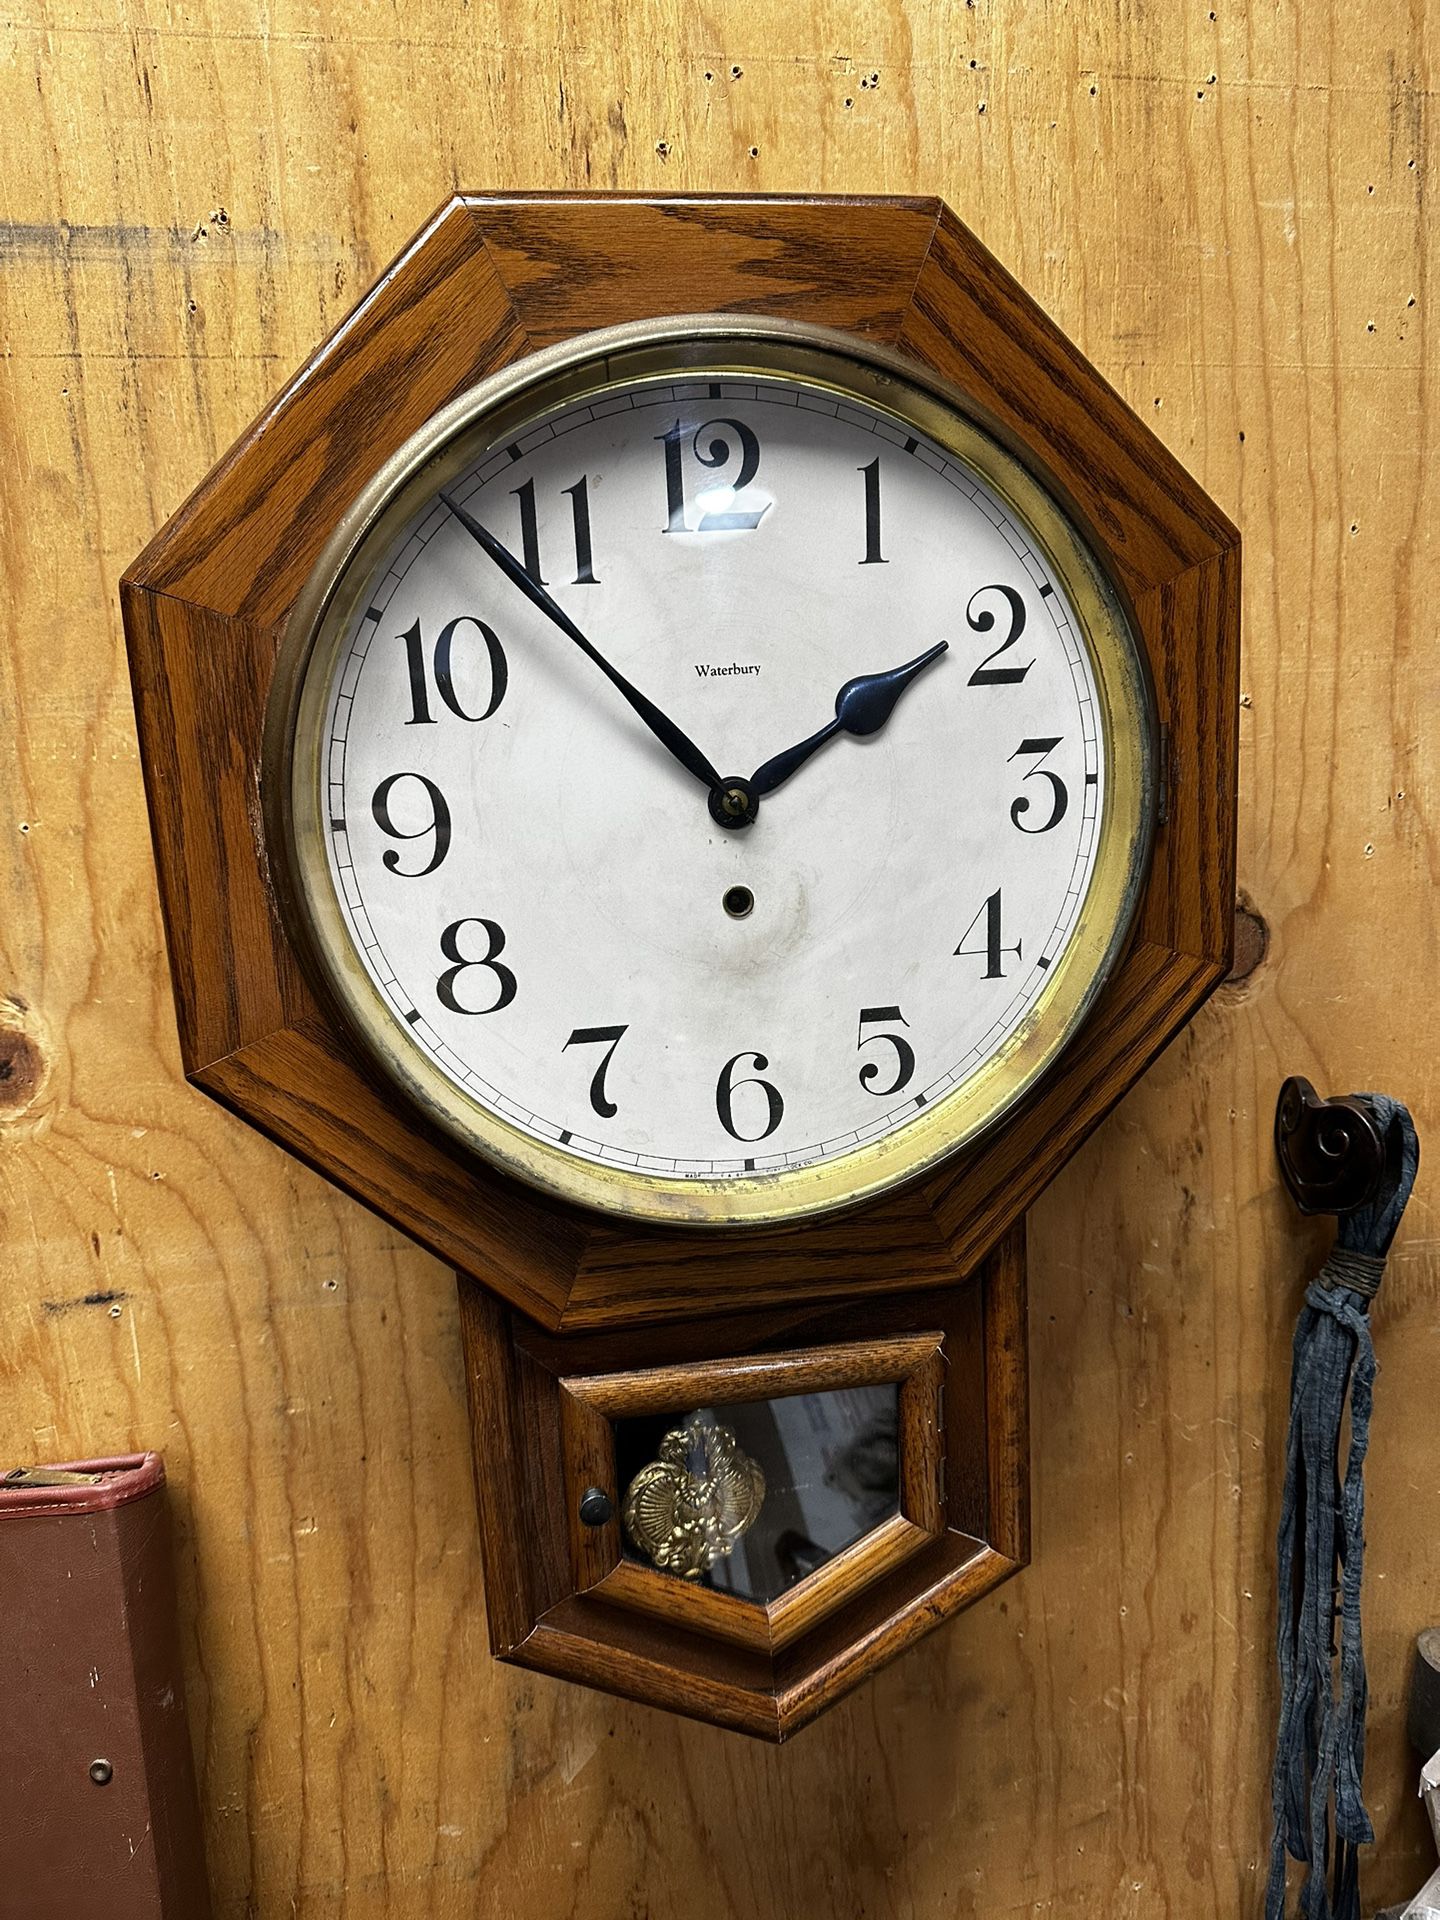 Antique Waterbury Schoolhouse Style Calendar Wall Clock - “12 Inch Drop” Model